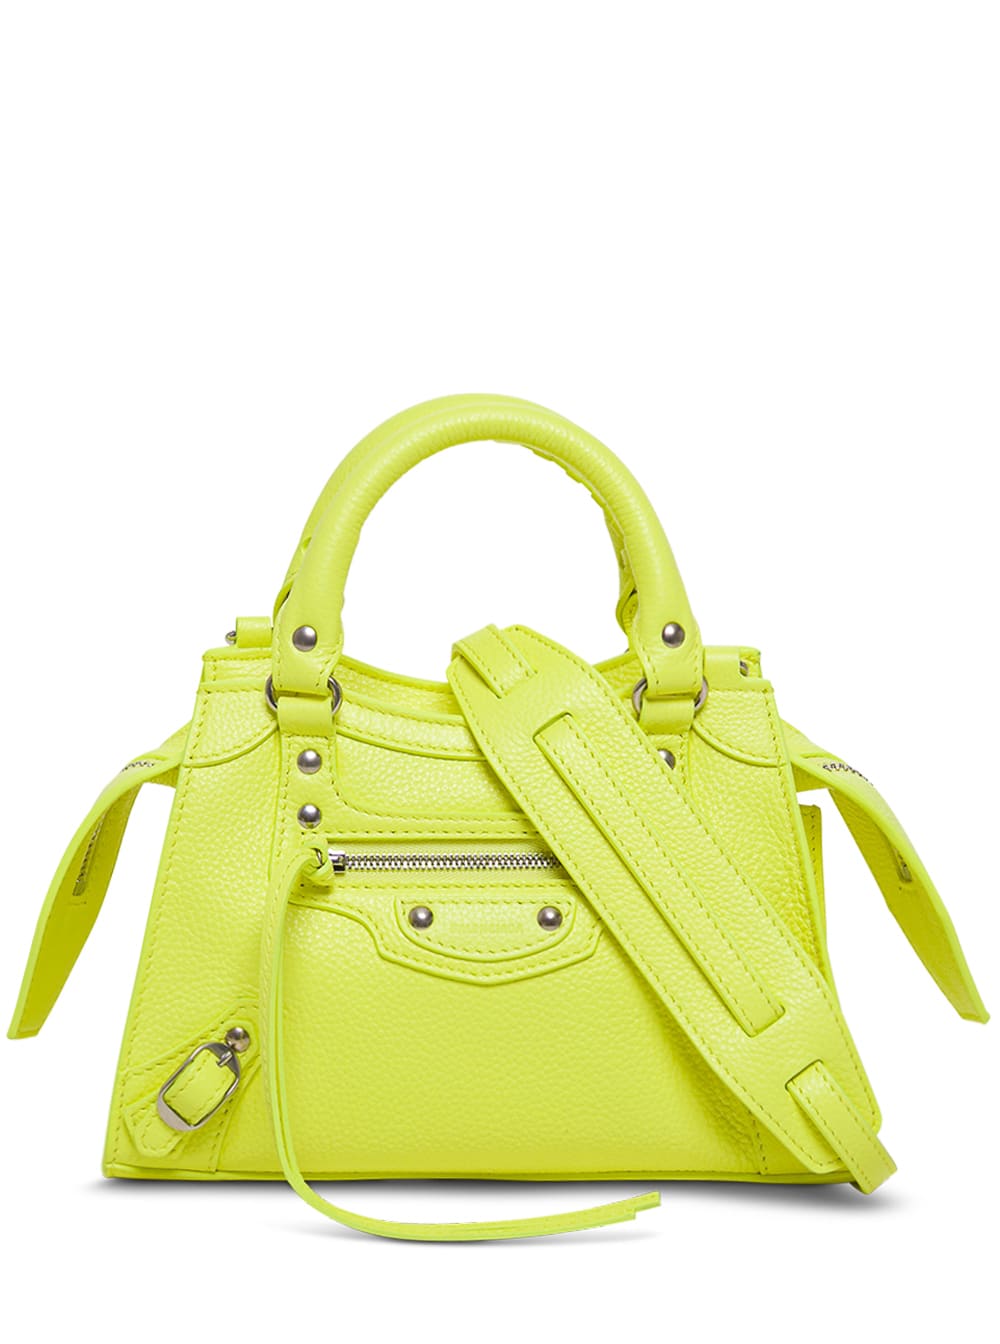 Balenciaga Neo Classic Yellow Leather Handbag